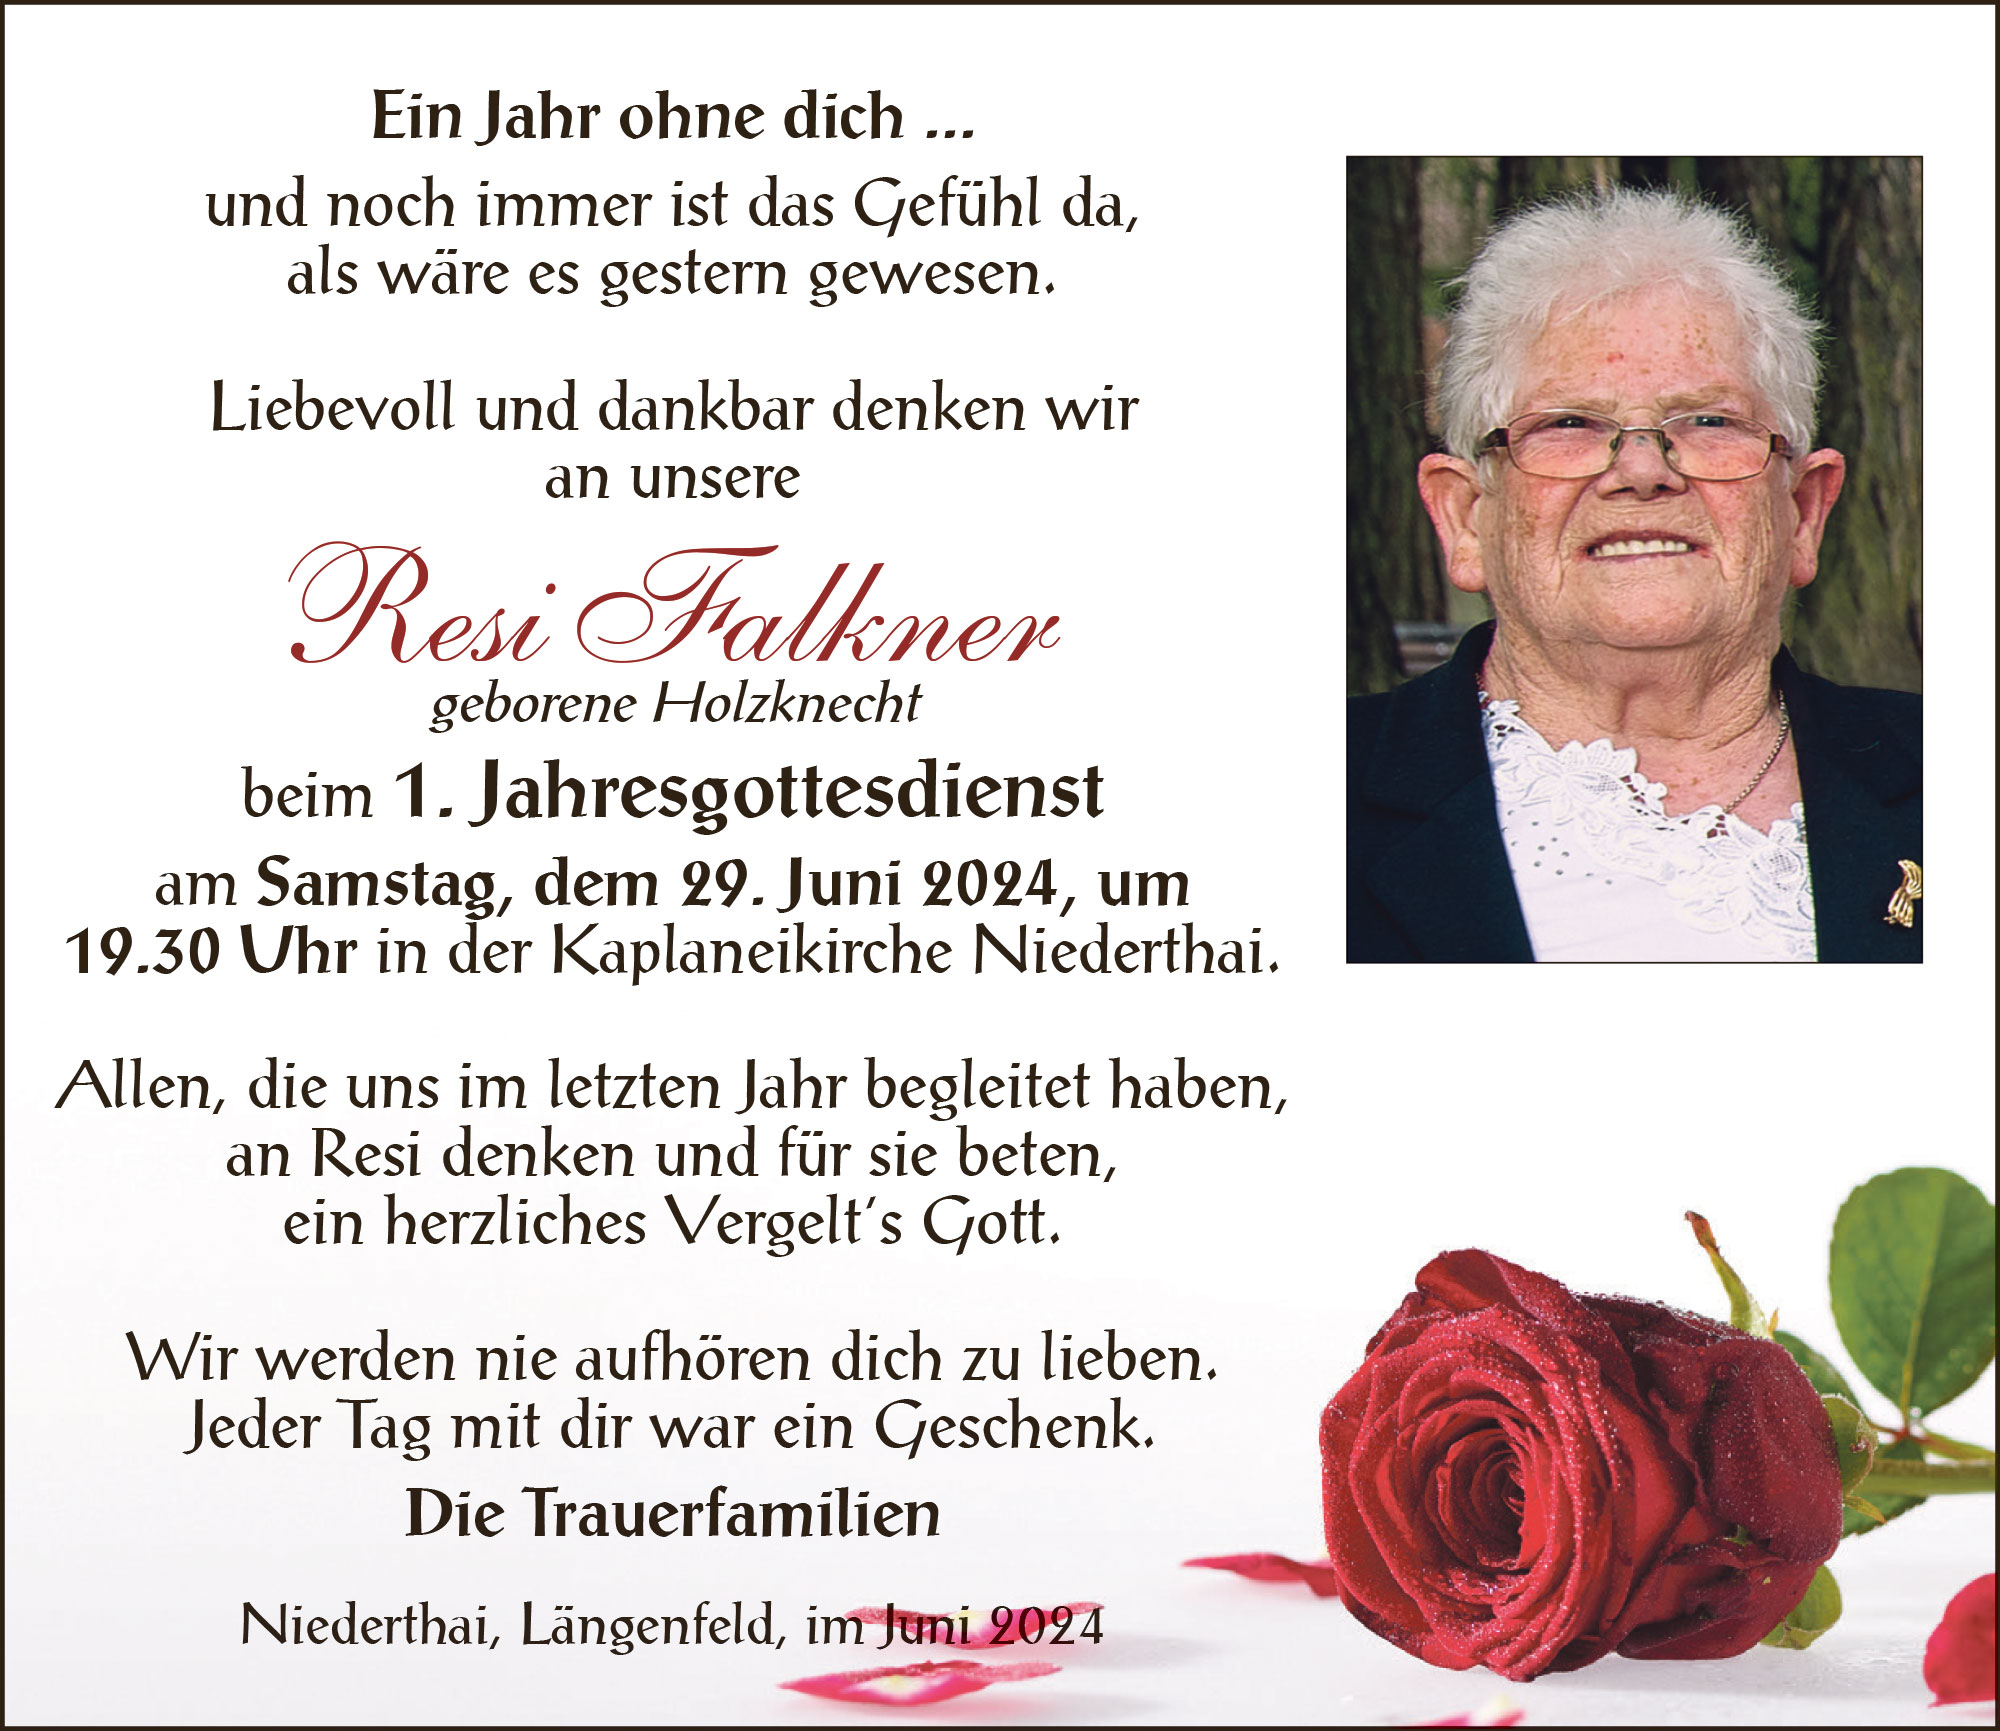 Theresia Falkner